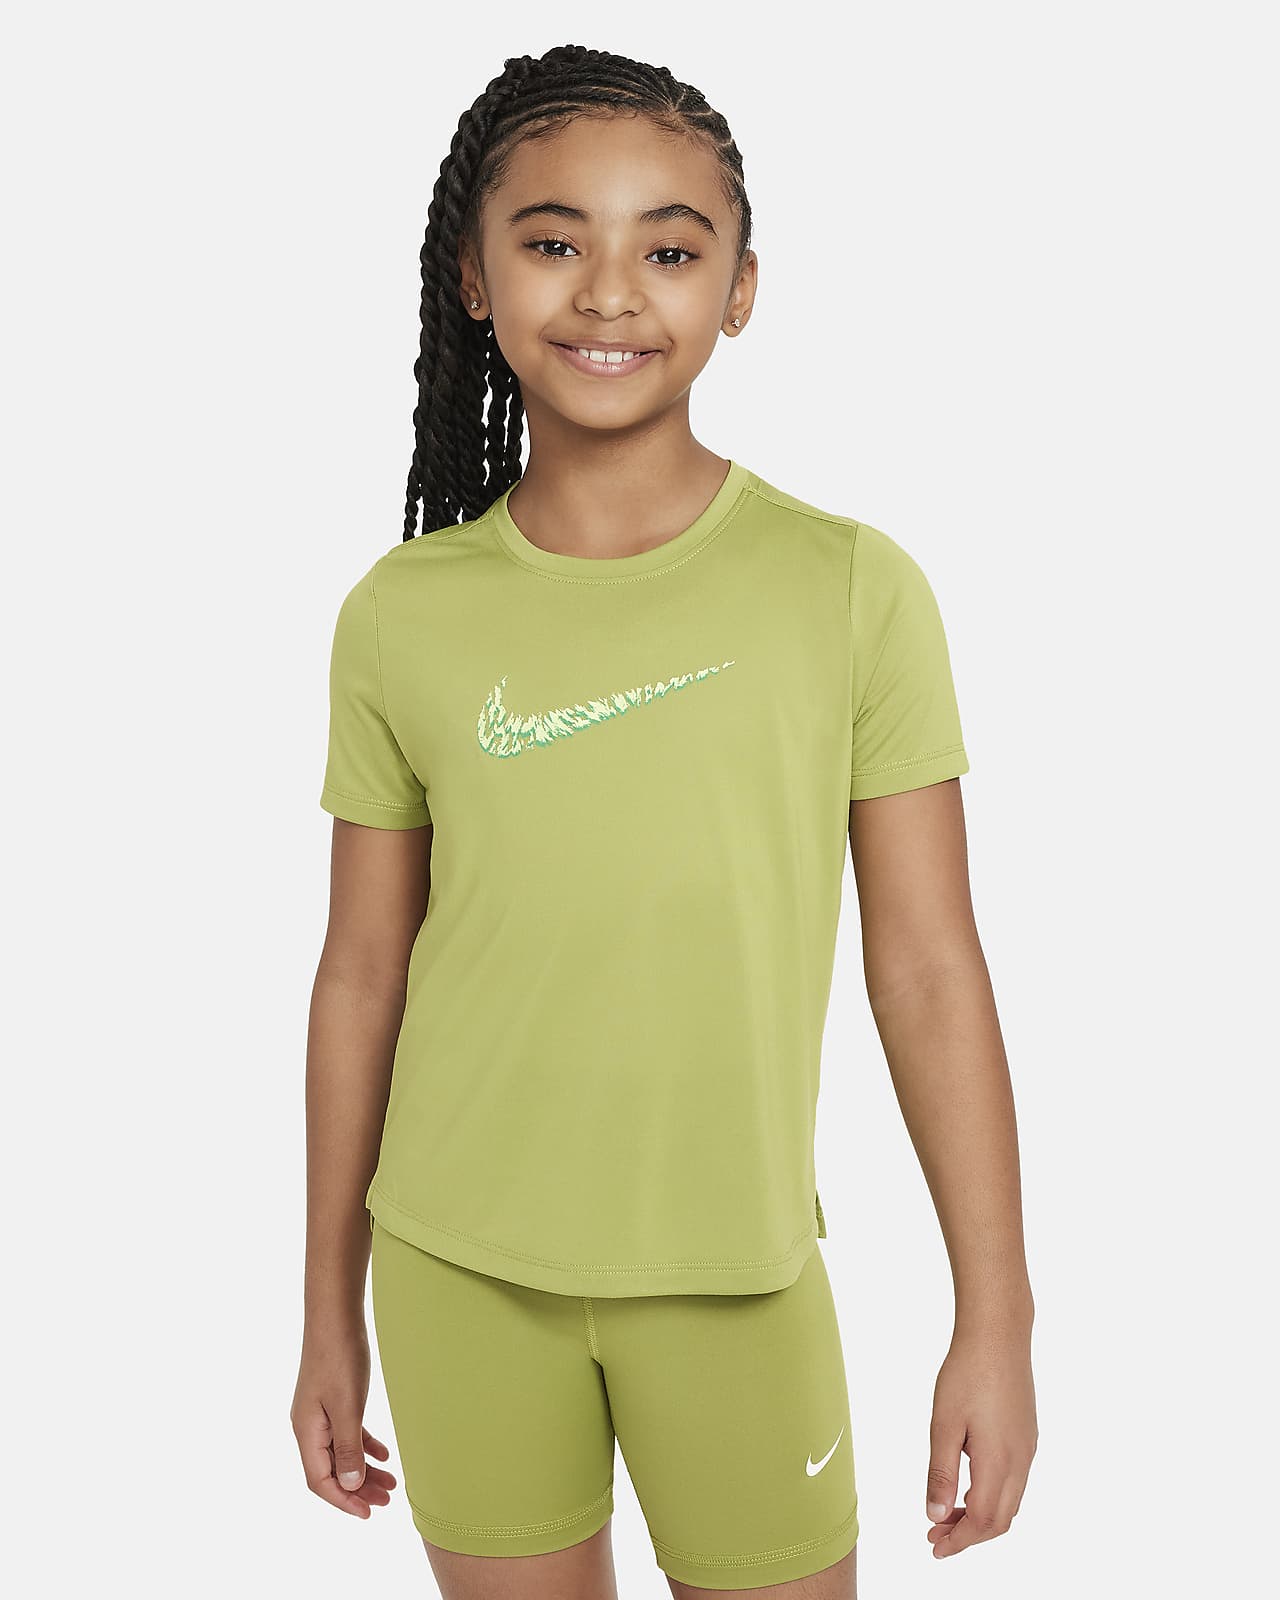 Training (Girls\') Kids\' Top. Short-Sleeve Nike One Big